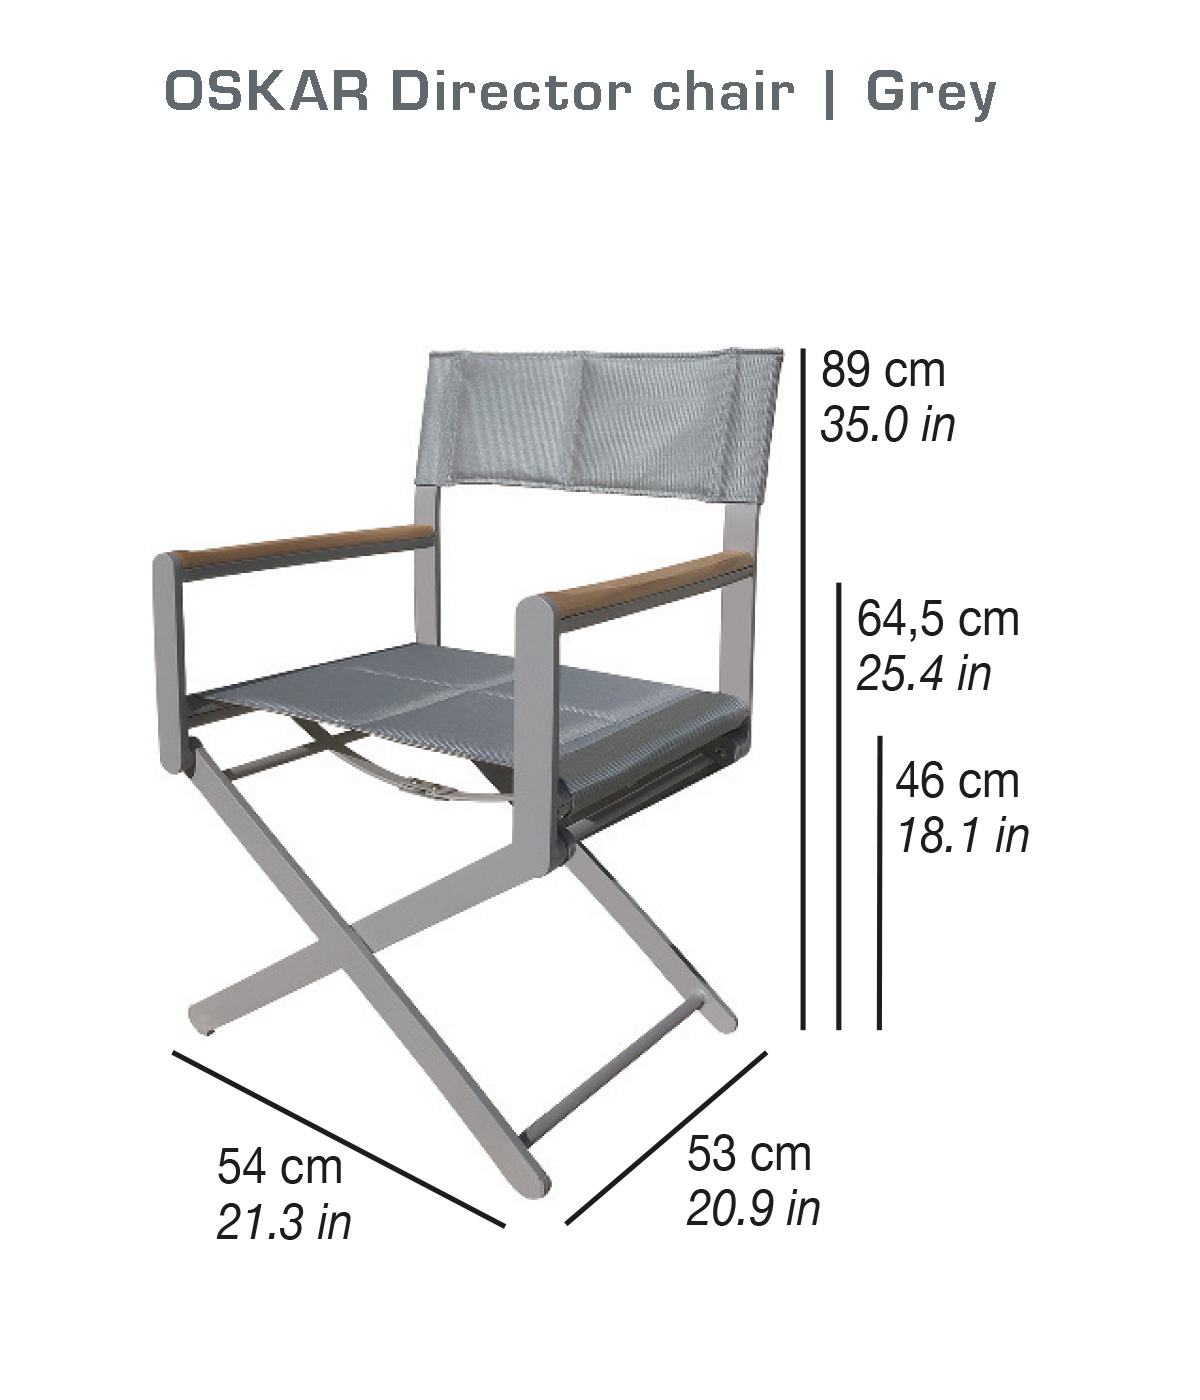 OSKAR Director chair | Grey